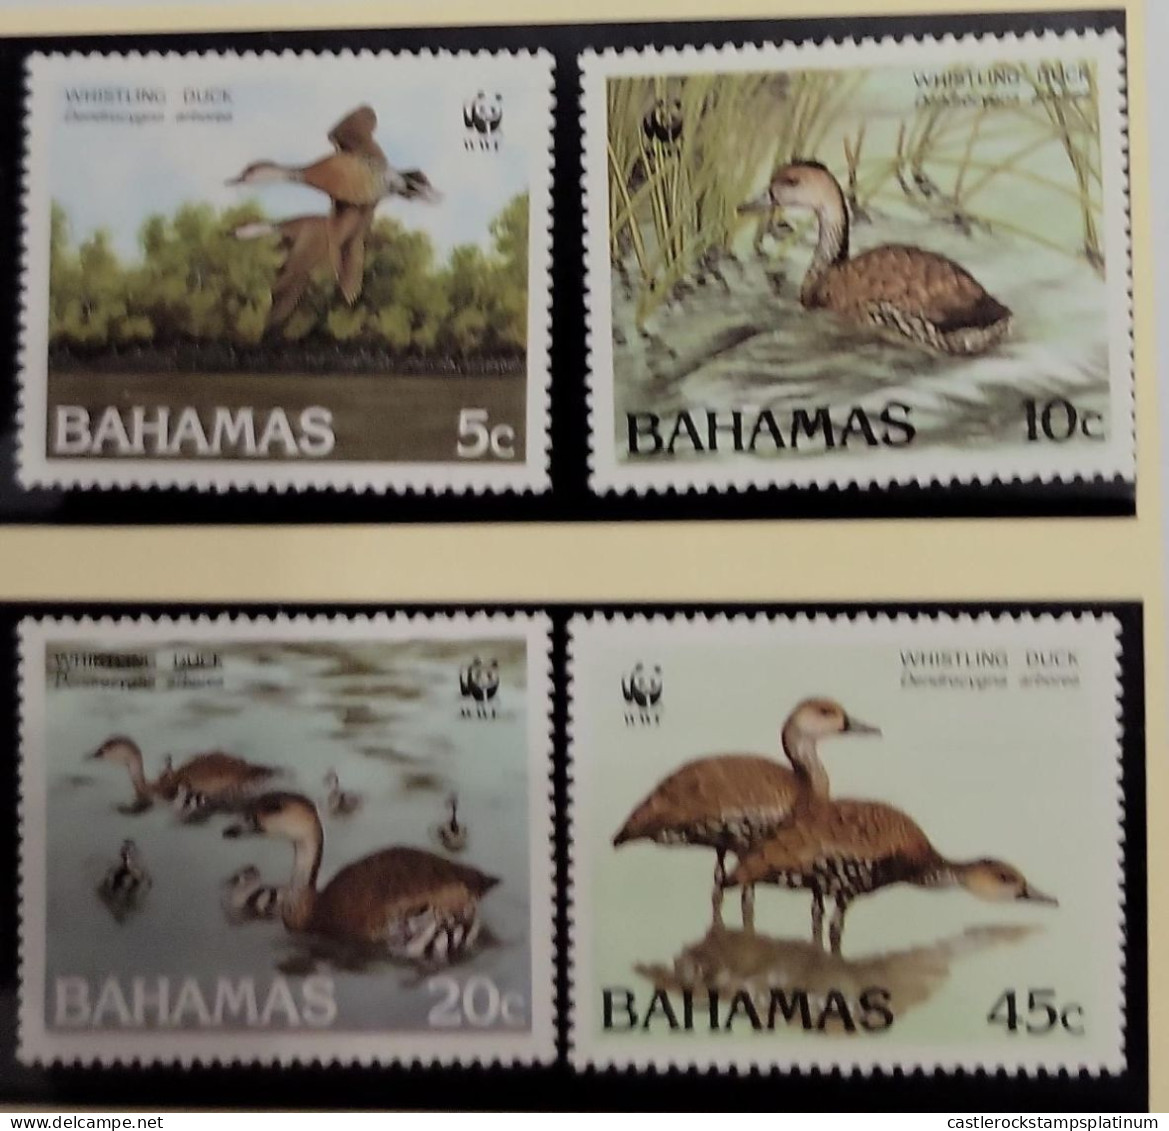 O) 1988 BAHAMAS, BIRDS. WWF - WORLD WILDLIFE FUND, WISTLING DUCKS, DENDROCYGNA ARBREA, DUCKS IN FLIGHT, AMONG MARINE PLA - Bahamas (1973-...)